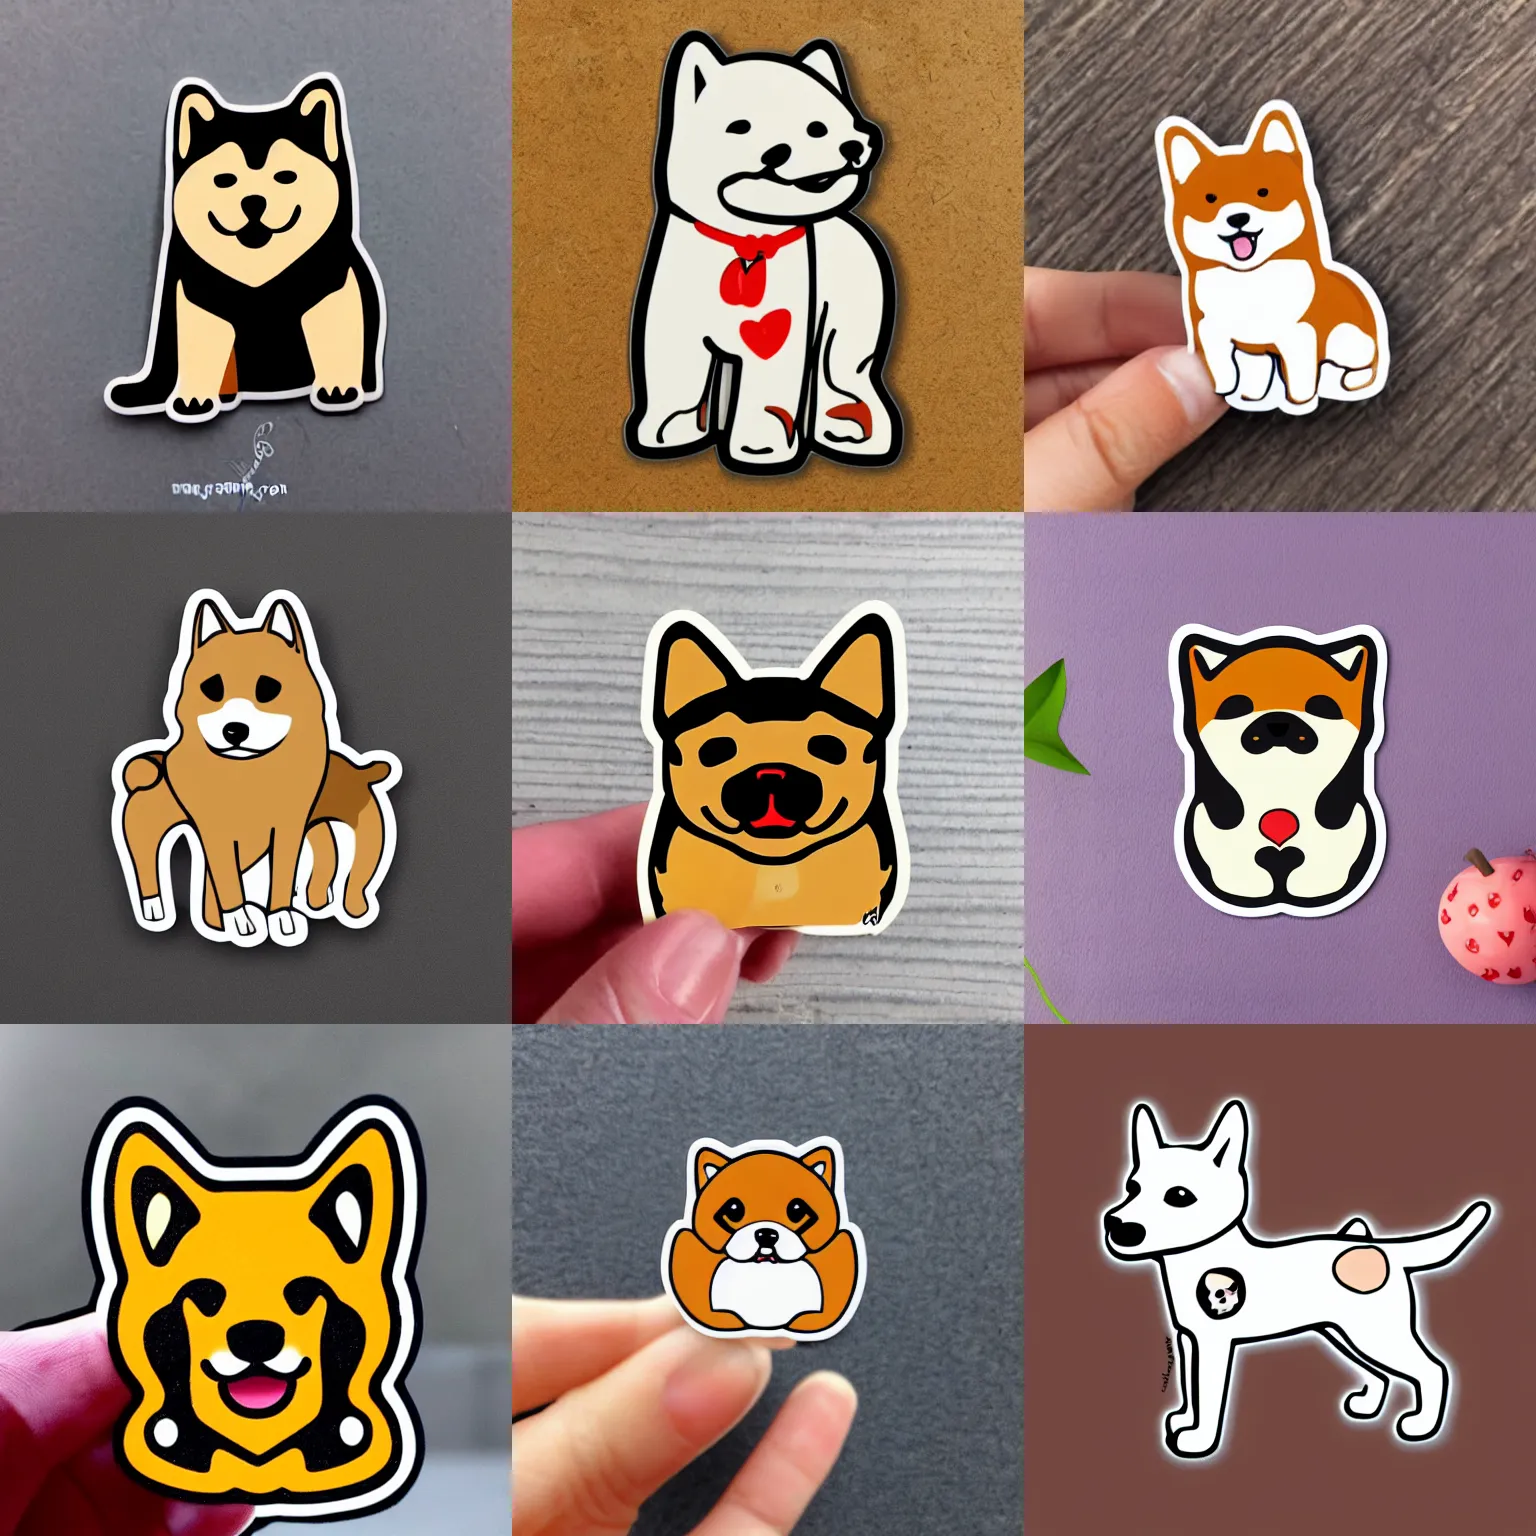 Prompt: cartoon die cut sticker of shiba inu puppy